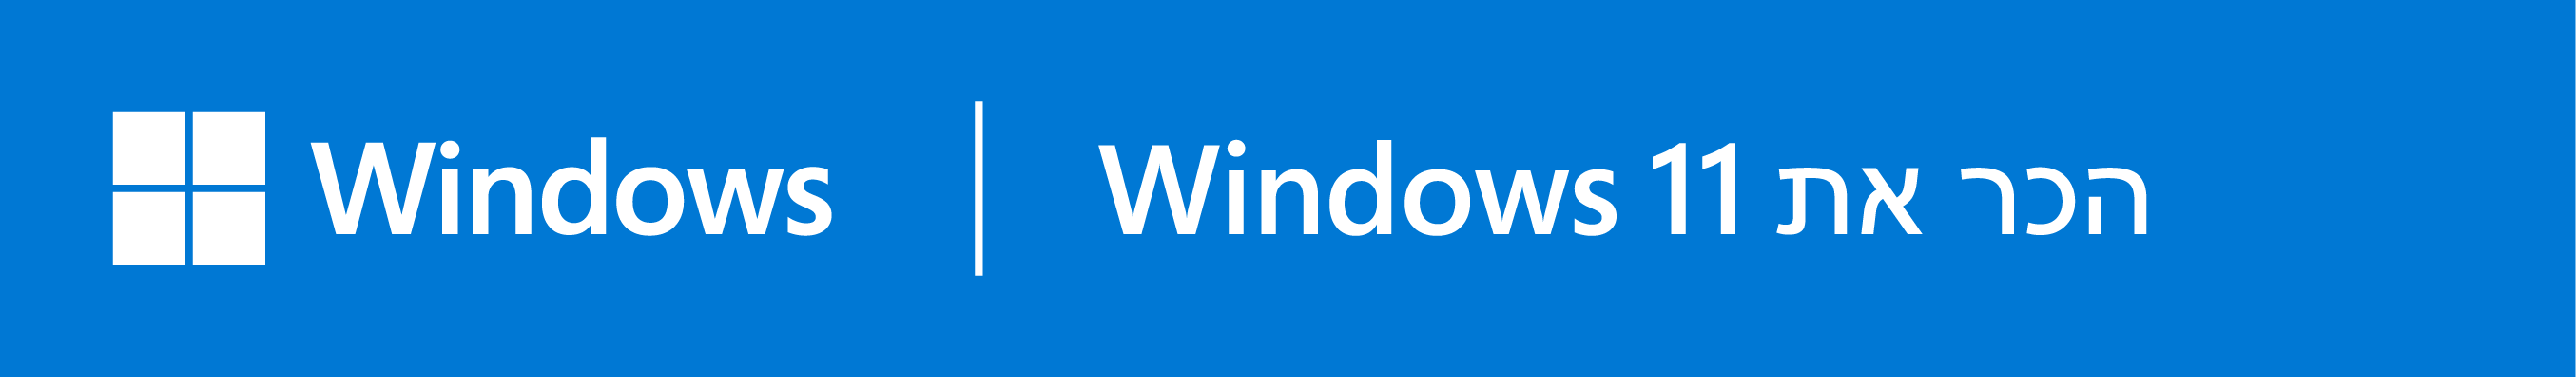 ASUS ממליץ על Windows 11 Pro לעסקים.